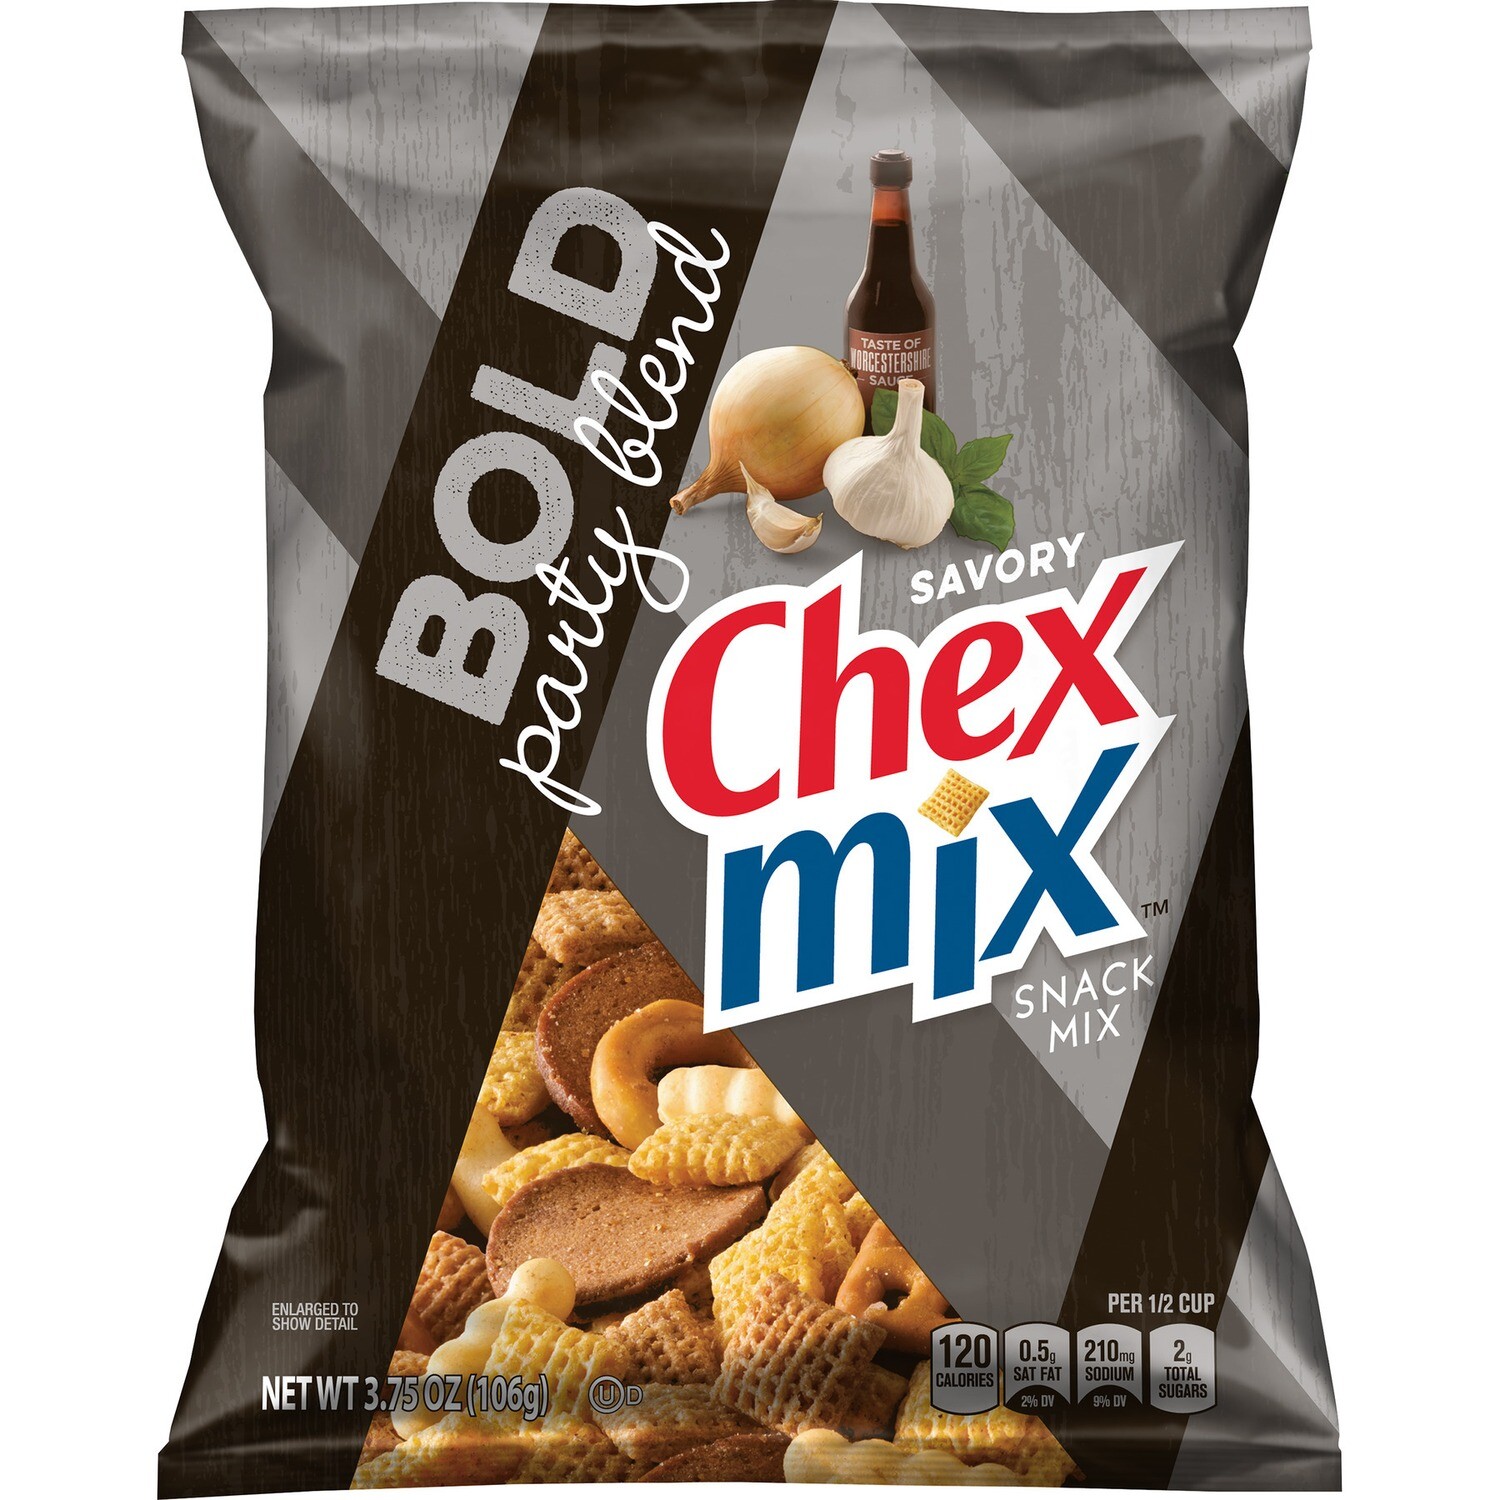 Chex Mix Bold Party 3.75oz bag